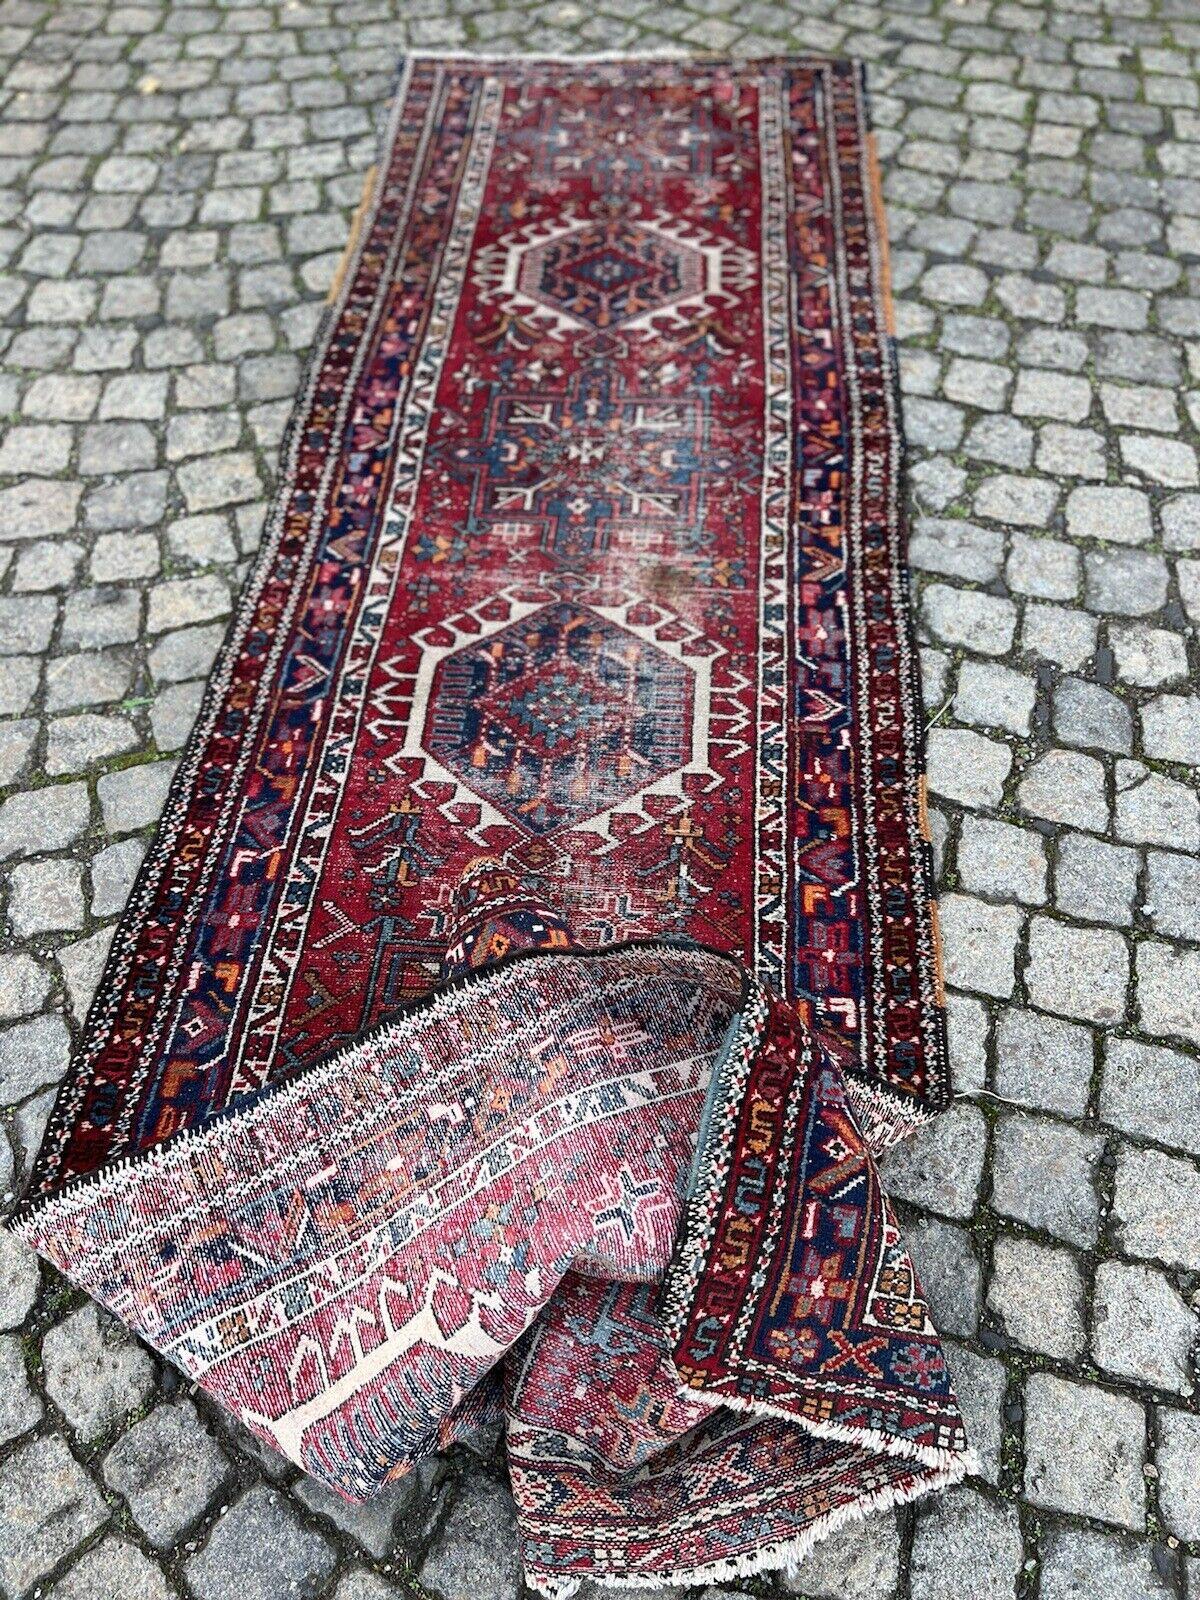 Handmade Antique Persian Style Karajeh Runner Rug 2.9' x 11.2', 1920s - 1S57 For Sale 6